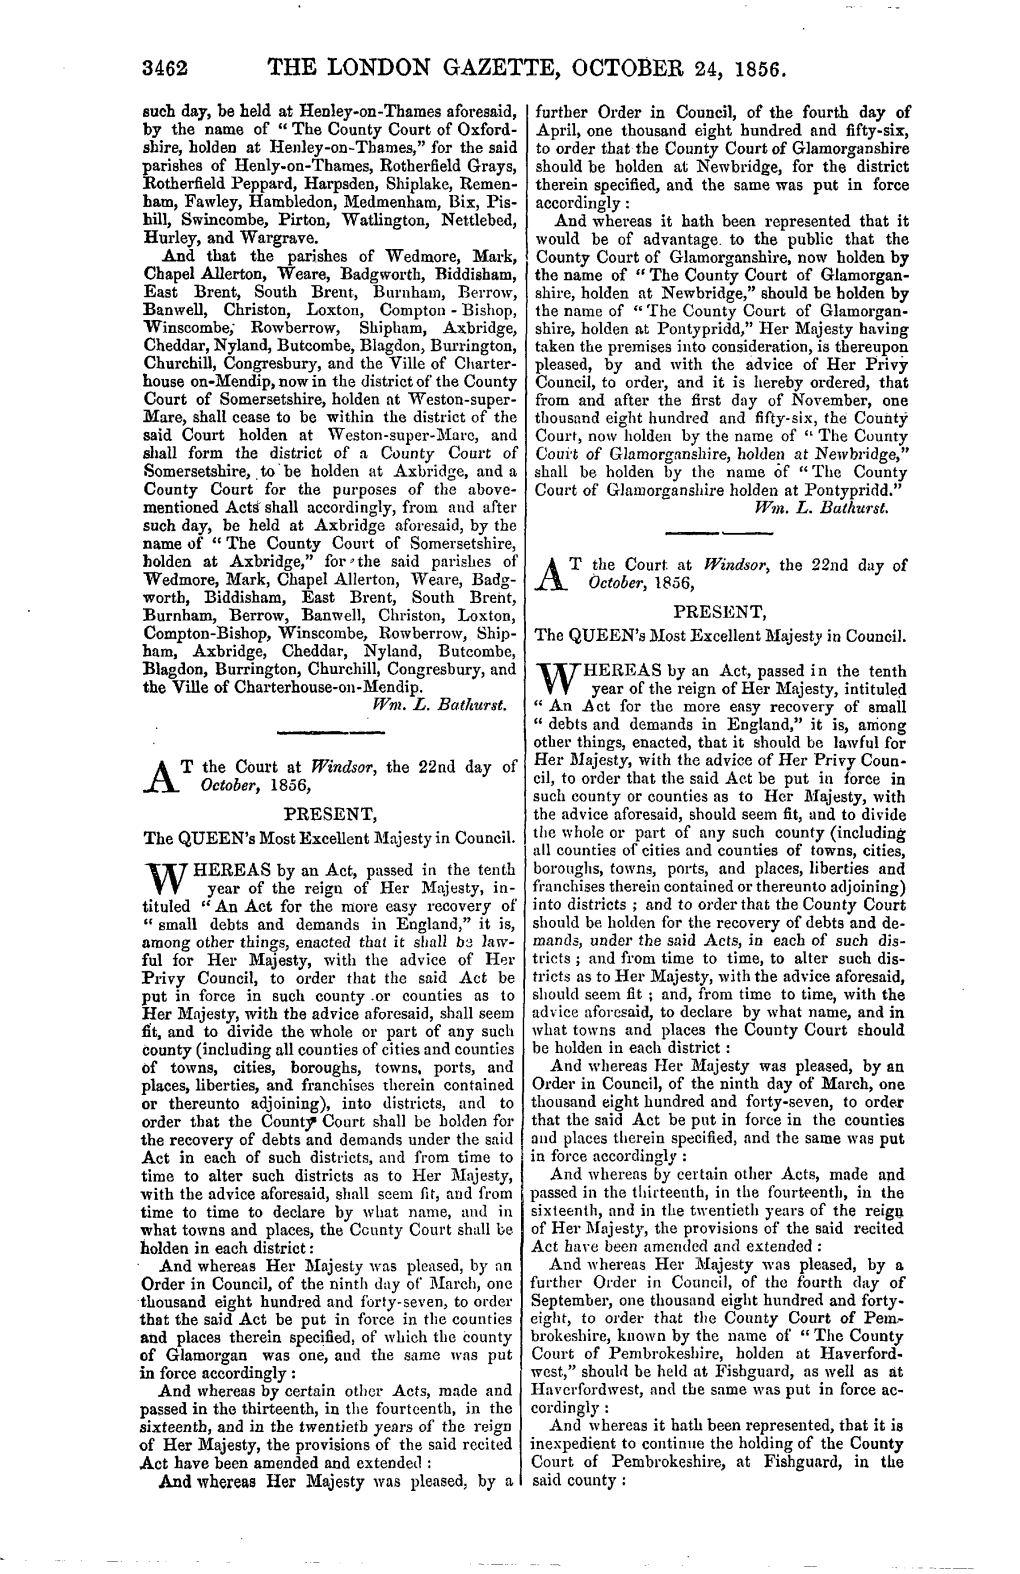 The London Gazette, October 24, 1856